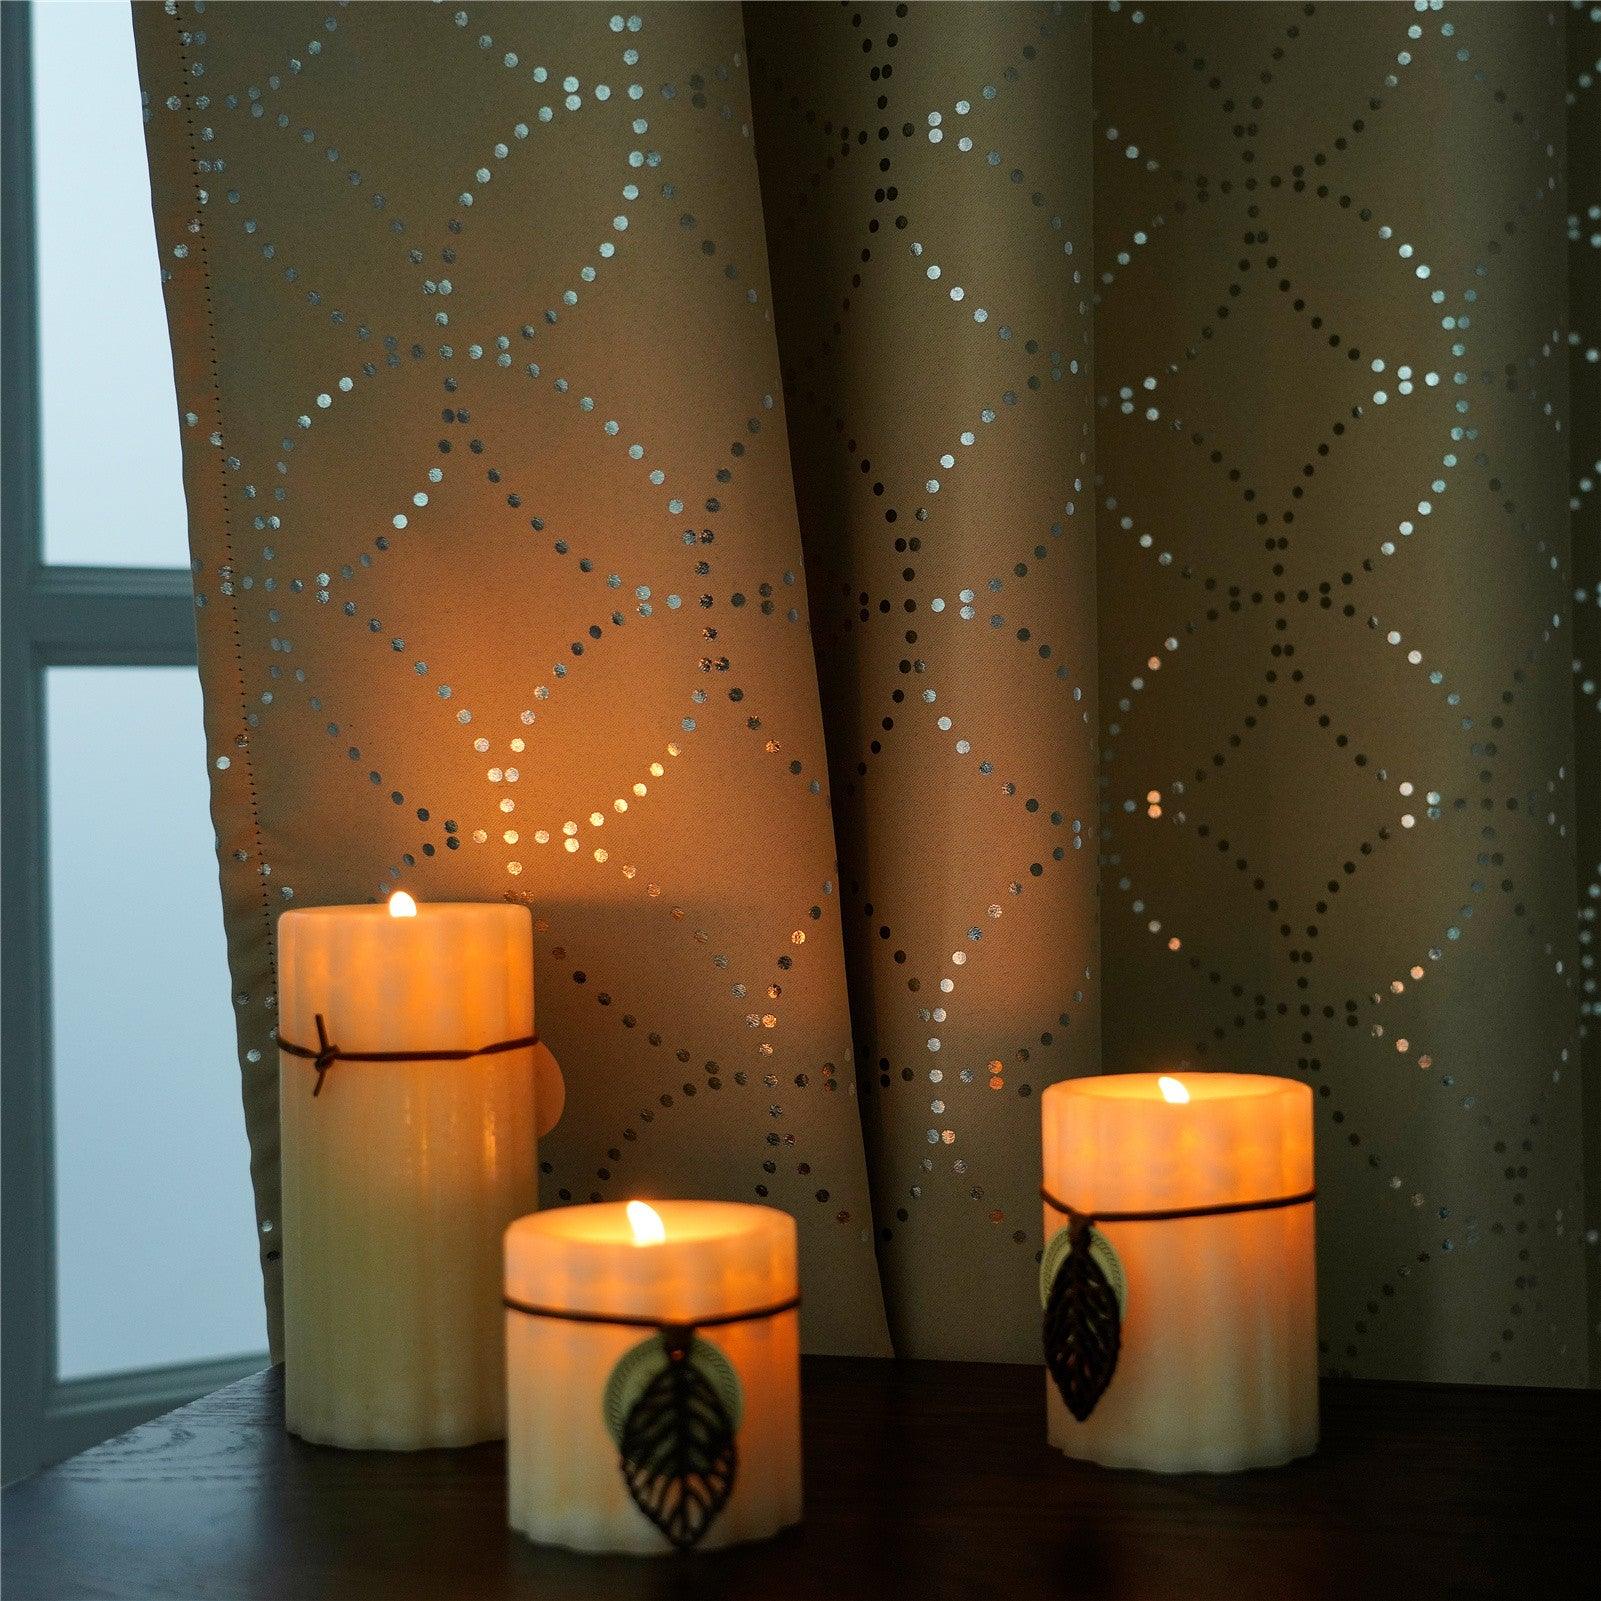 Topfinel Pongee Made Silver Foil Dots Printed blackout curtains For Bedroom,100% Blackout Drapes - Topfinel